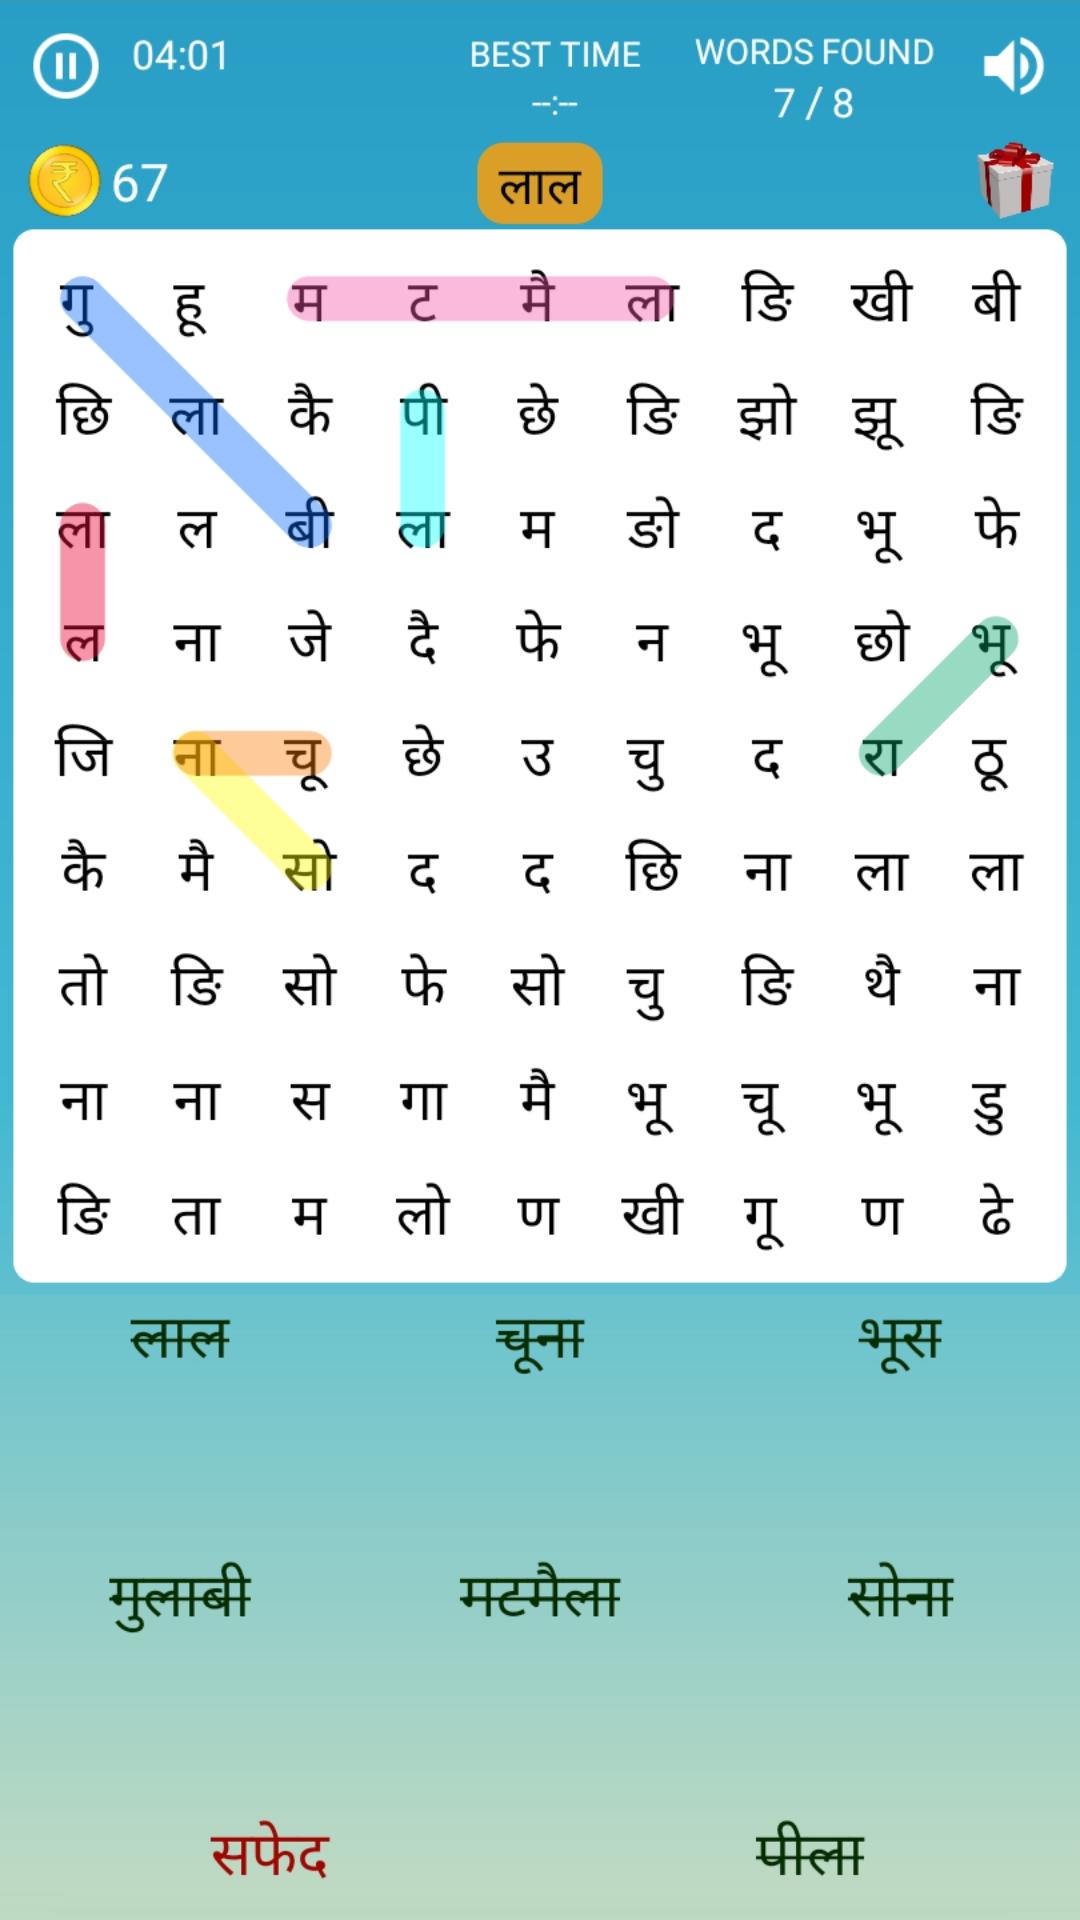 Hindi Word Search Game 2.2 Screenshot 8